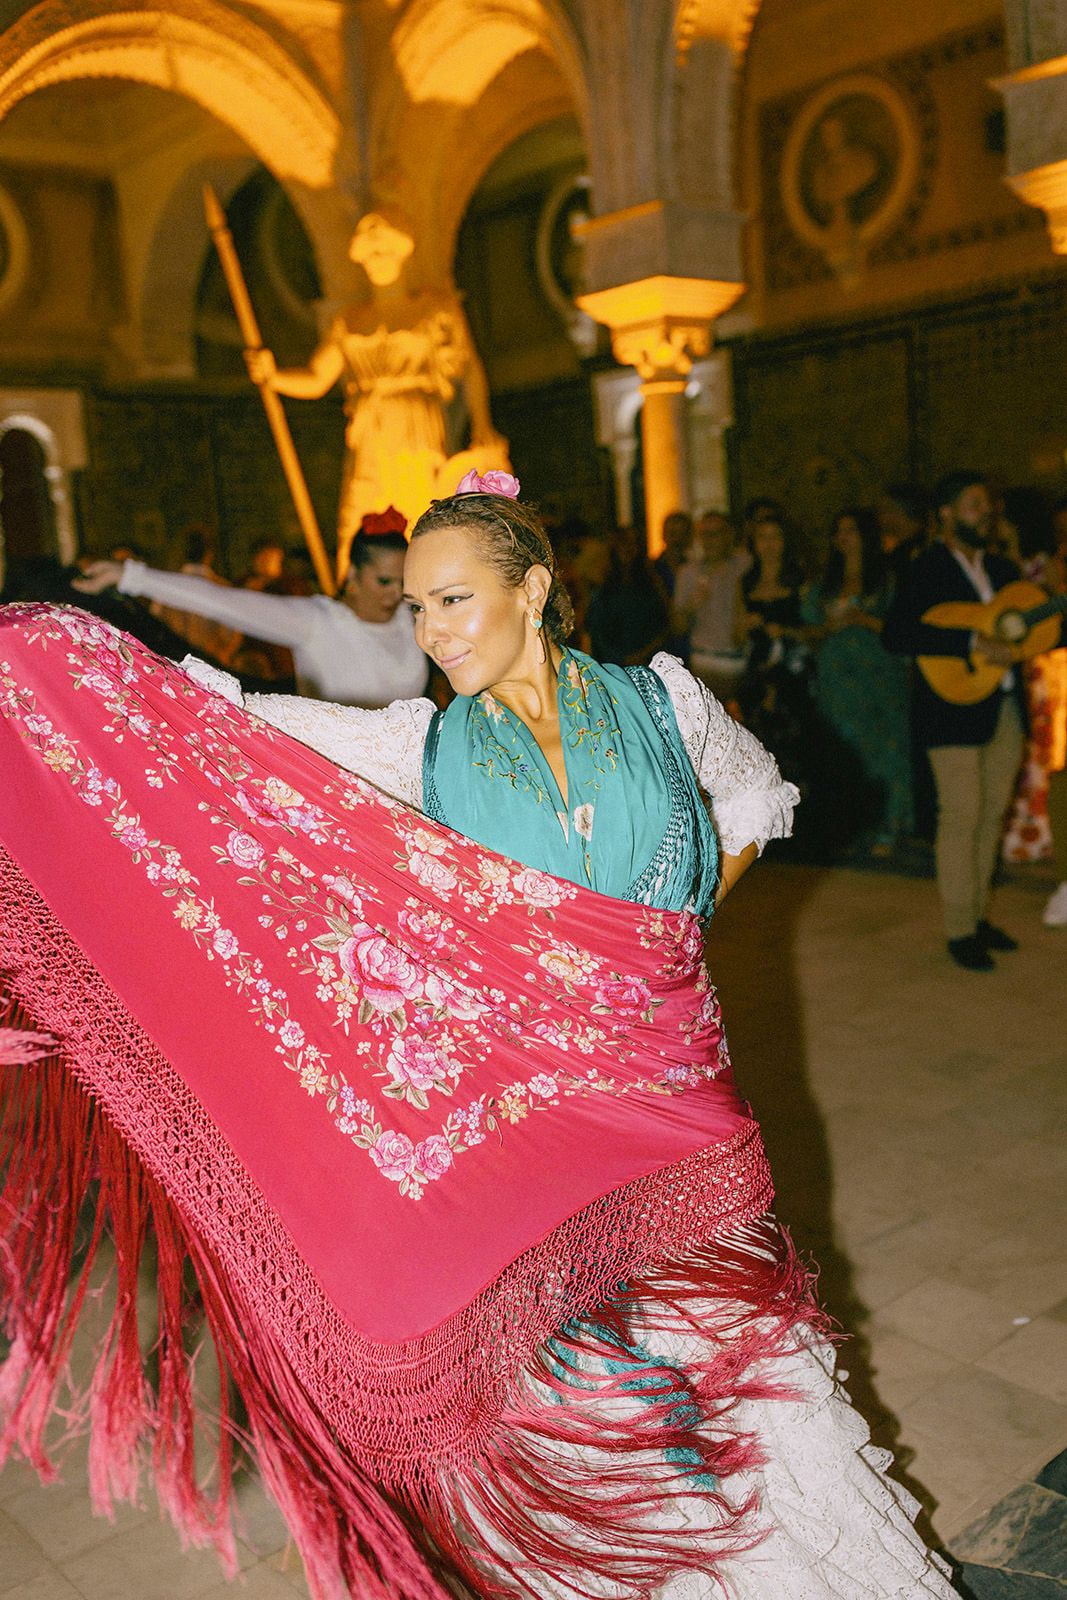 Flamenco dancer at Andalusian-Moorish party in Seville Spain